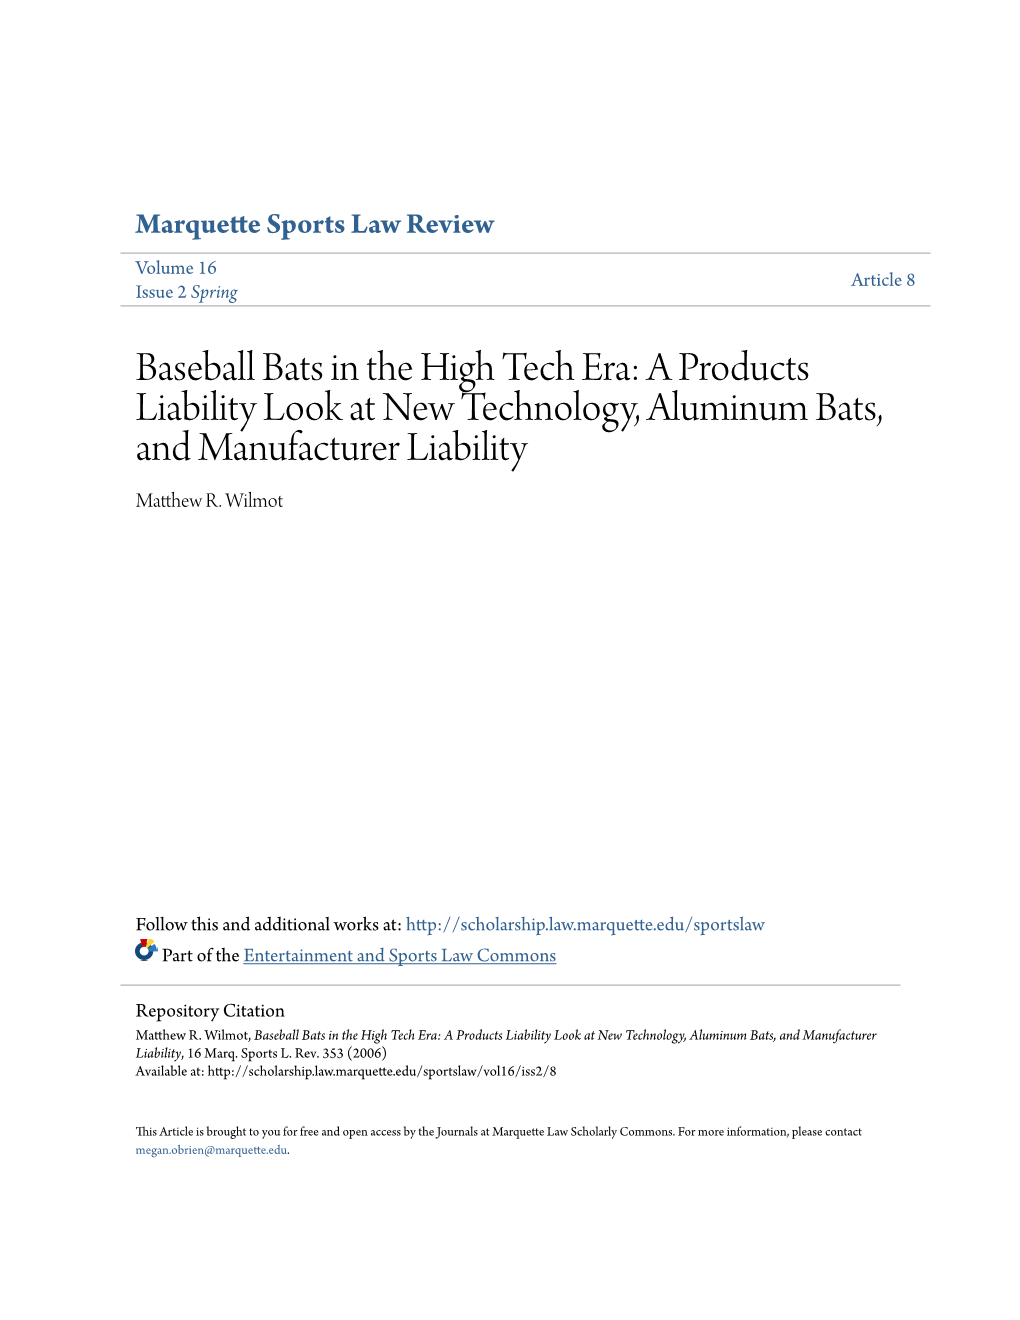 Baseball Bats in the High Tech Era: a Products Liability Look at New Technology, Aluminum Bats, and Manufacturer Liability Matthew R